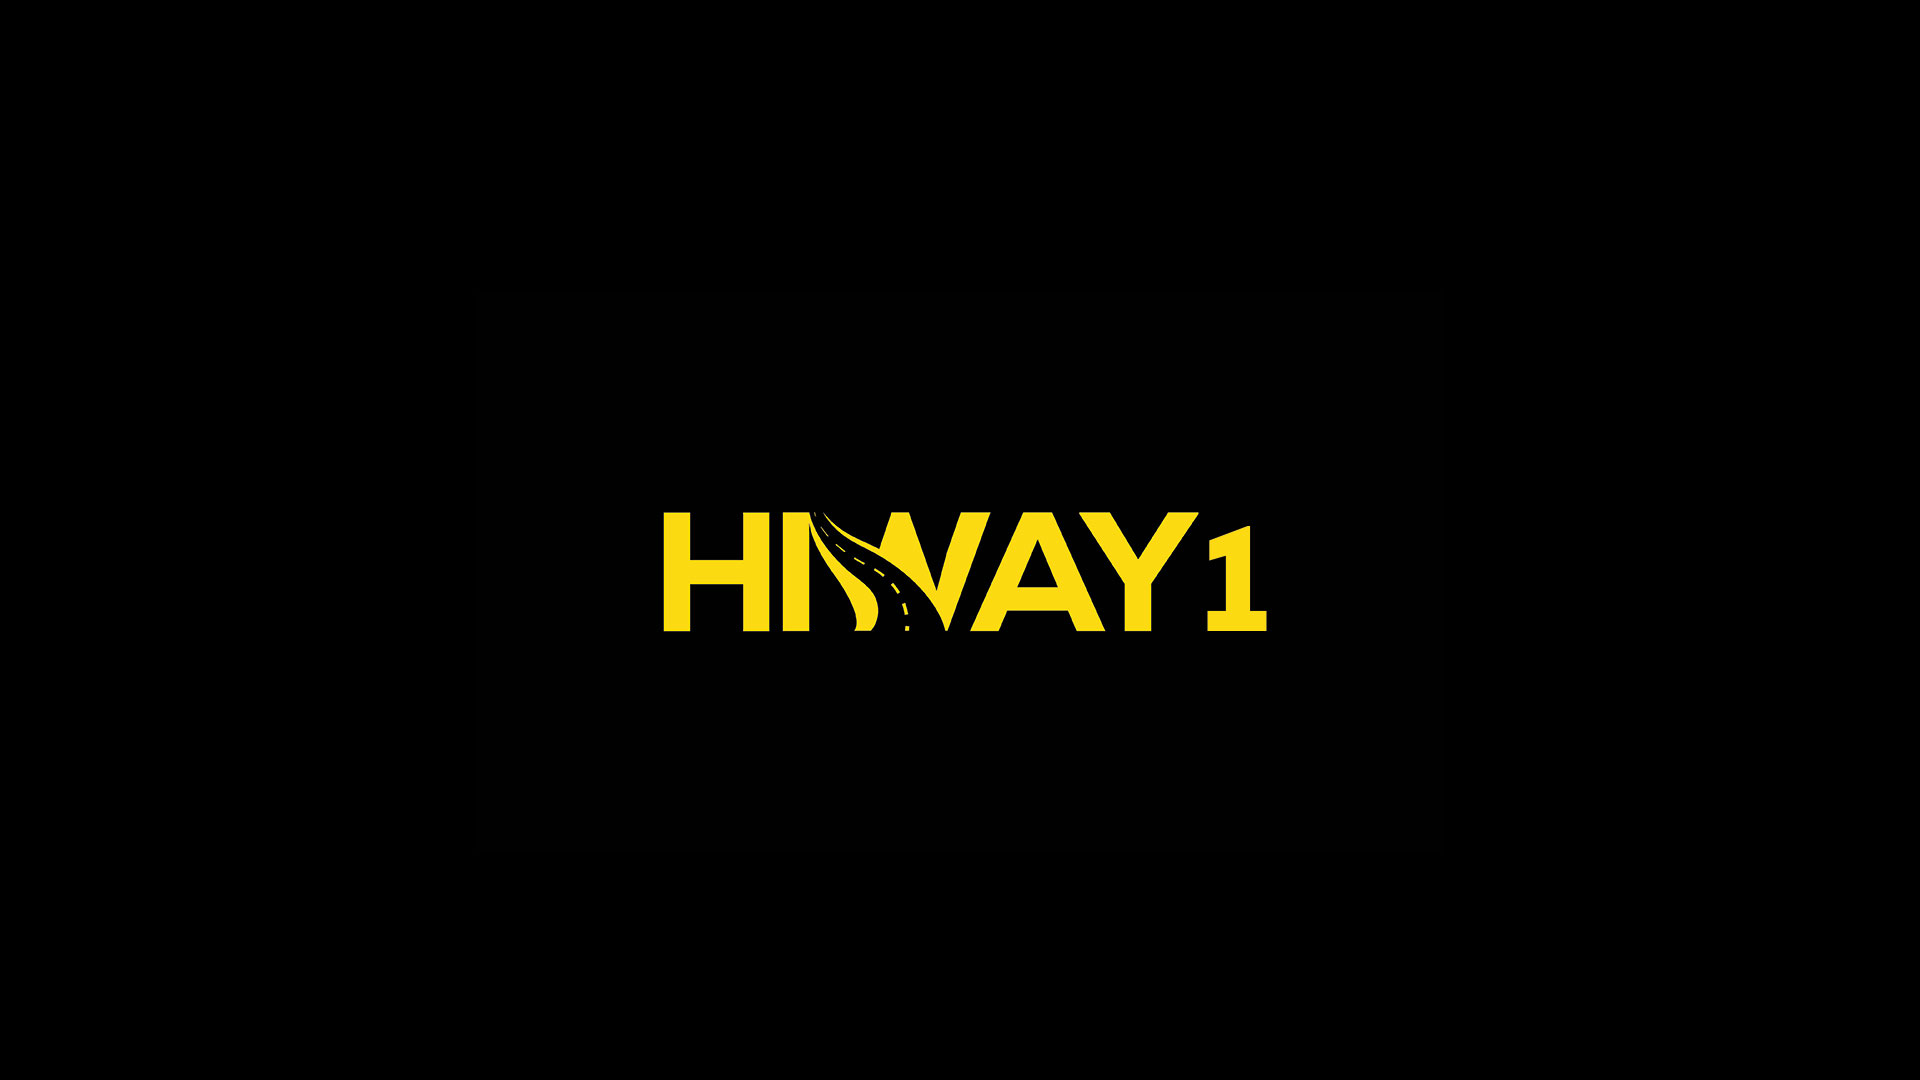 hiway1.com Online Since 1998